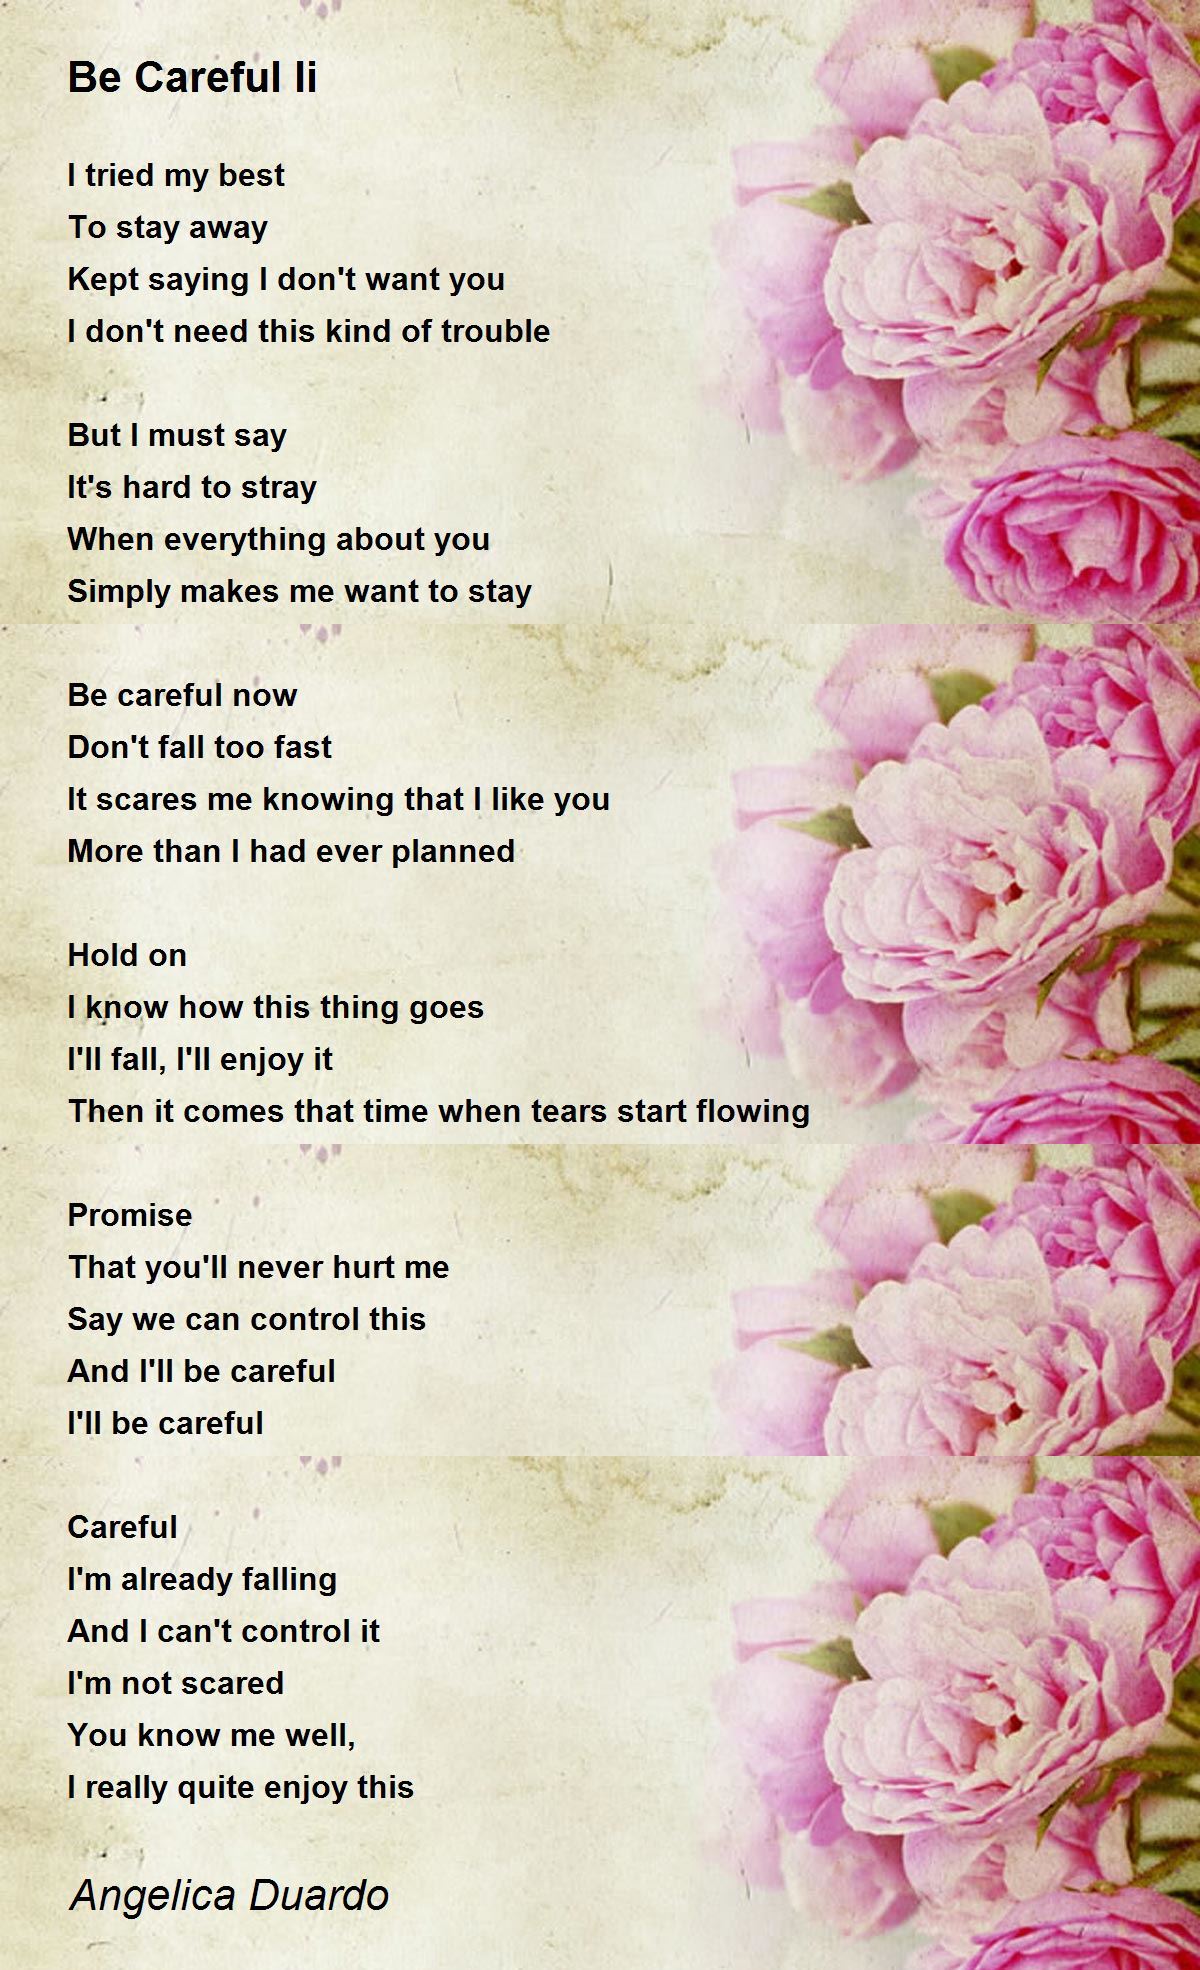 Be Careful Ii by Angelica Duardo - Be Careful Ii Poem